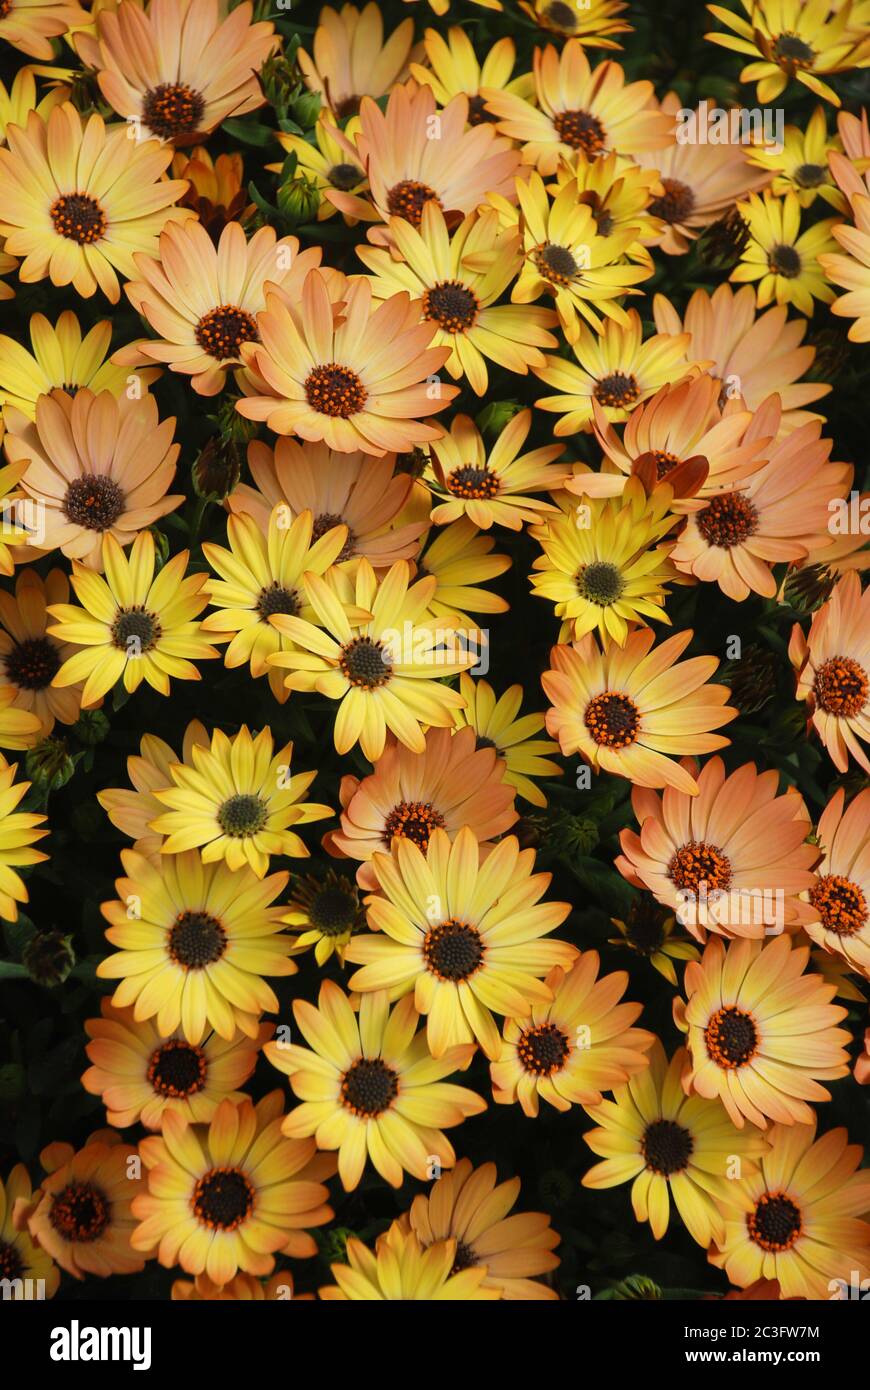 Orange osteospermum or dimorphotheca flowers in the flowerbed Stock Photo